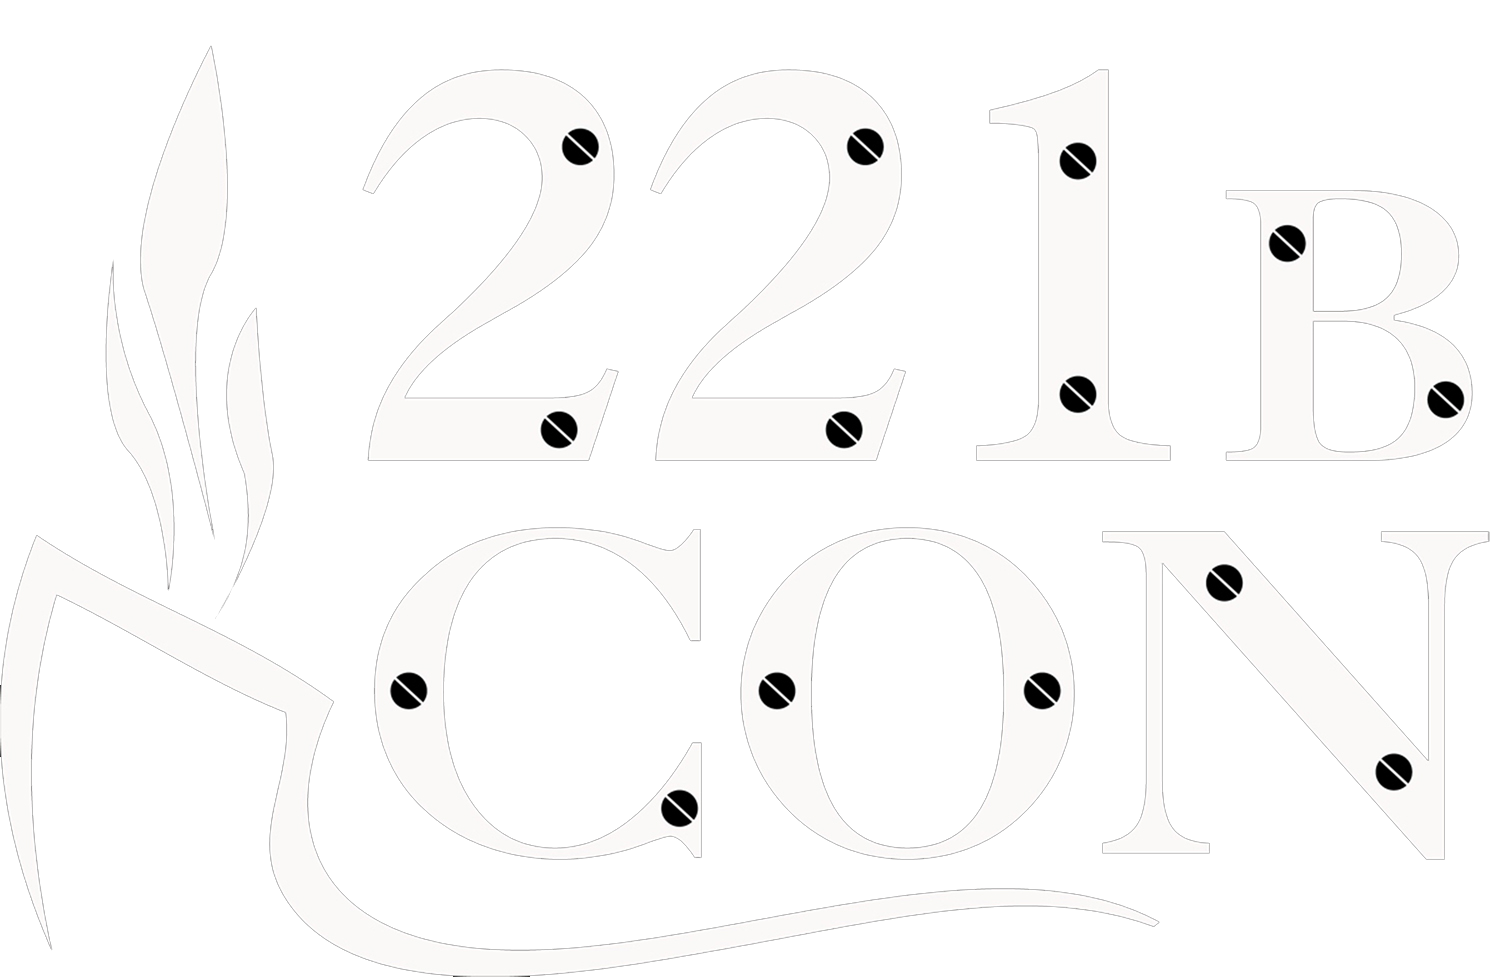 221B Con - A Fan Con for All Things Sherlock Holmes